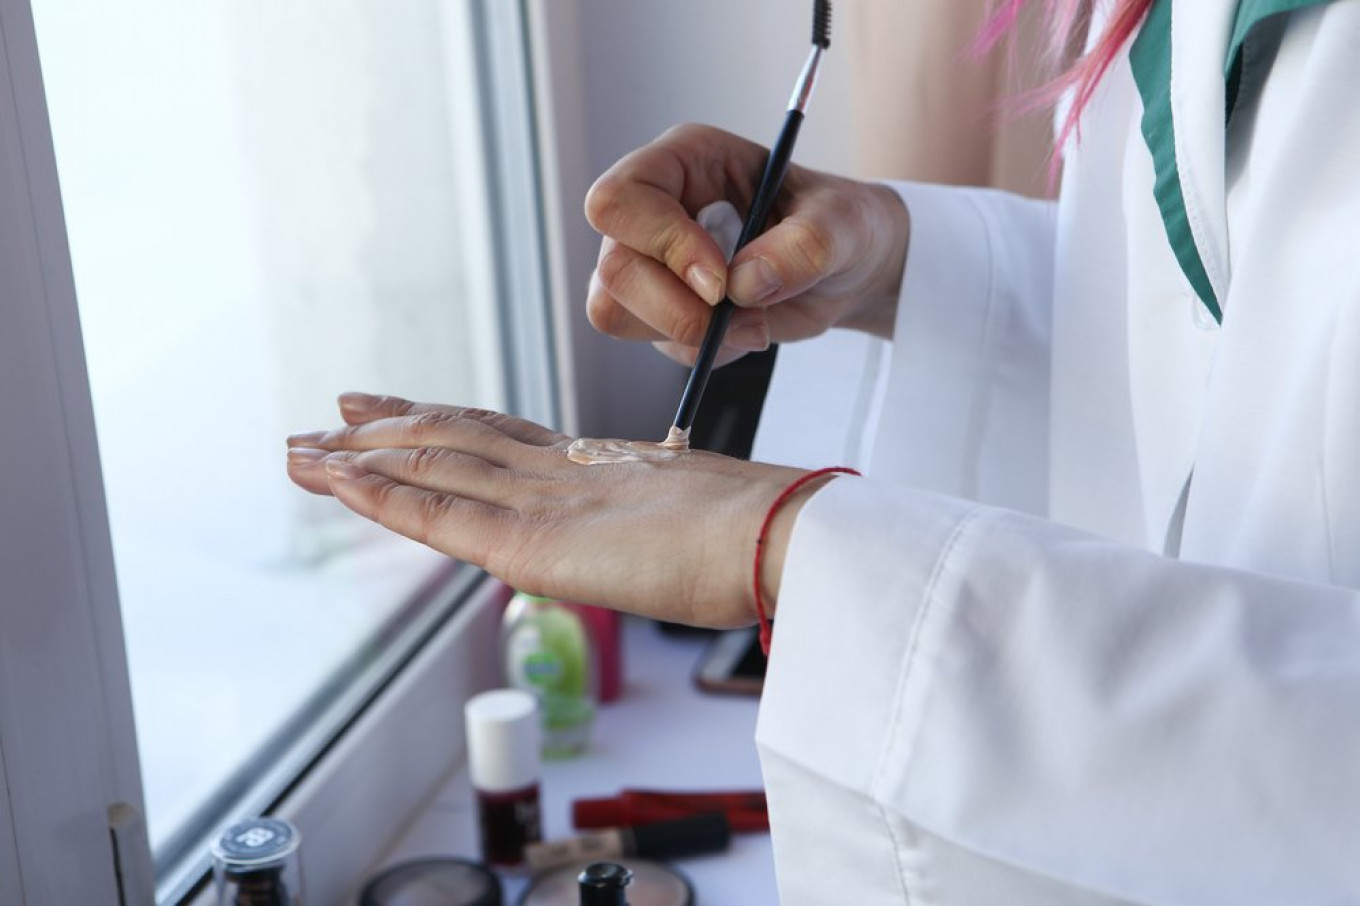 Moscow Makeup Artist Sees Clients Despite Coronavirus Infection